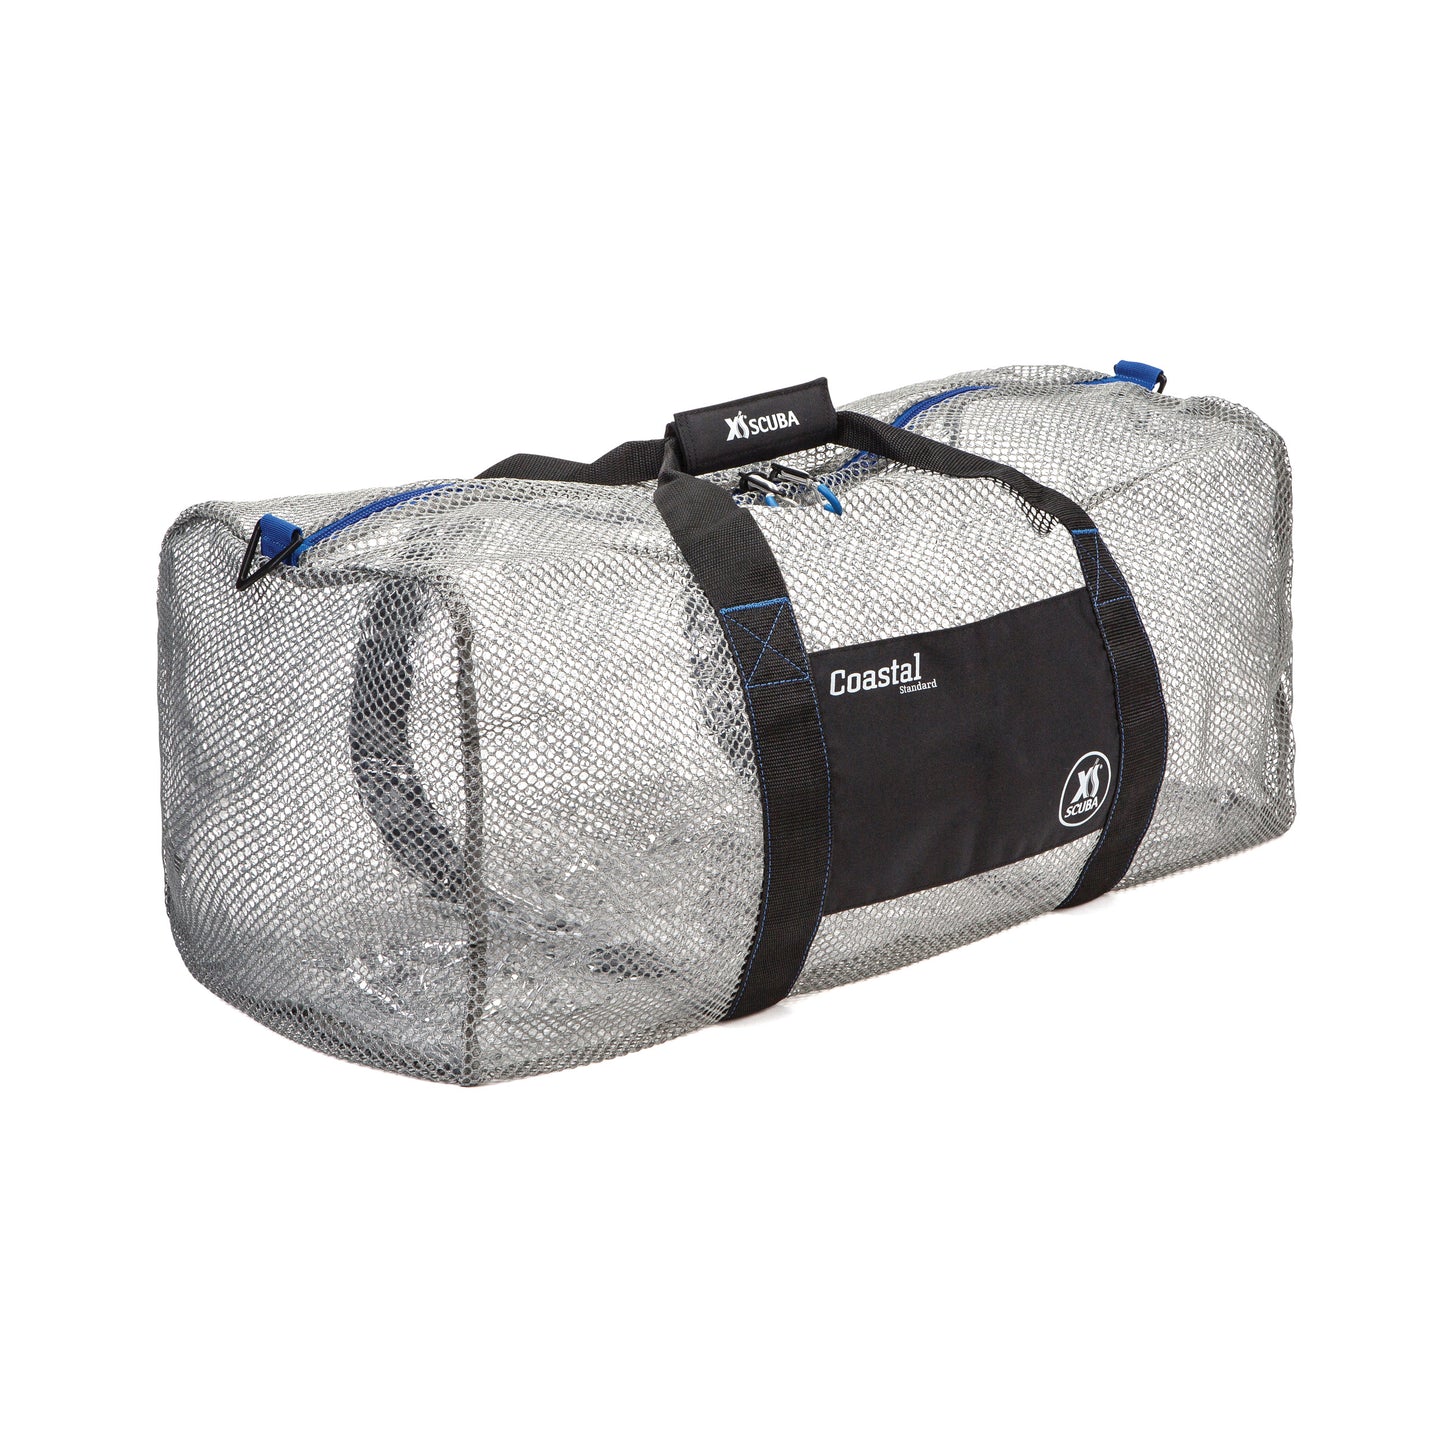 Coastal Standard Duffle Bag - XS Scuba